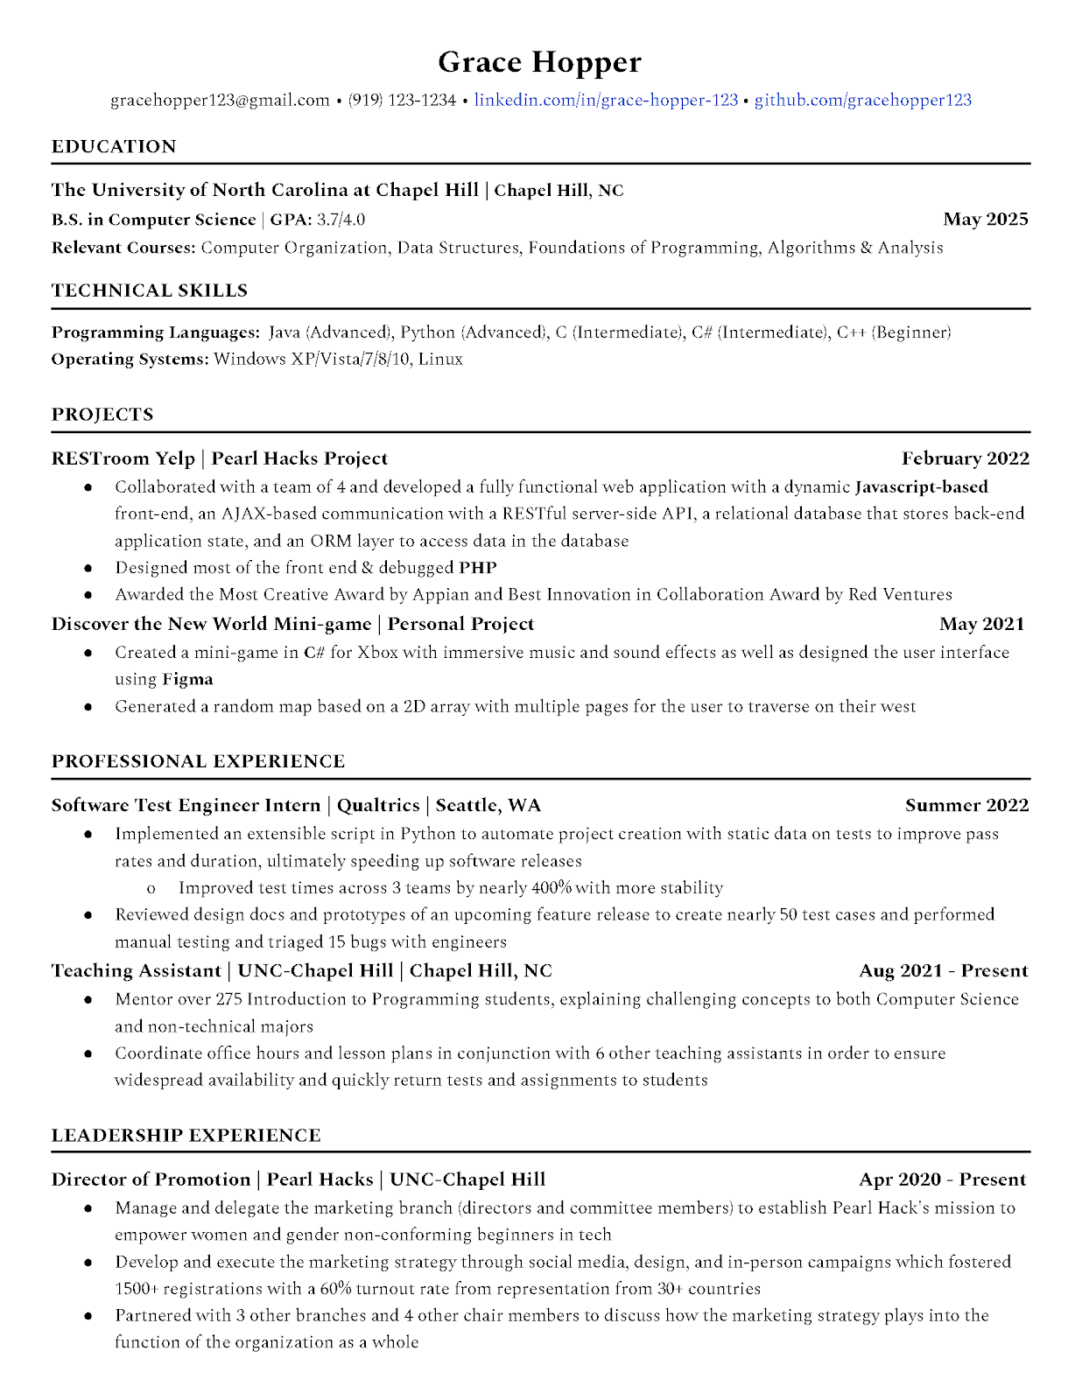 Tech CV/Resume Template by UNC